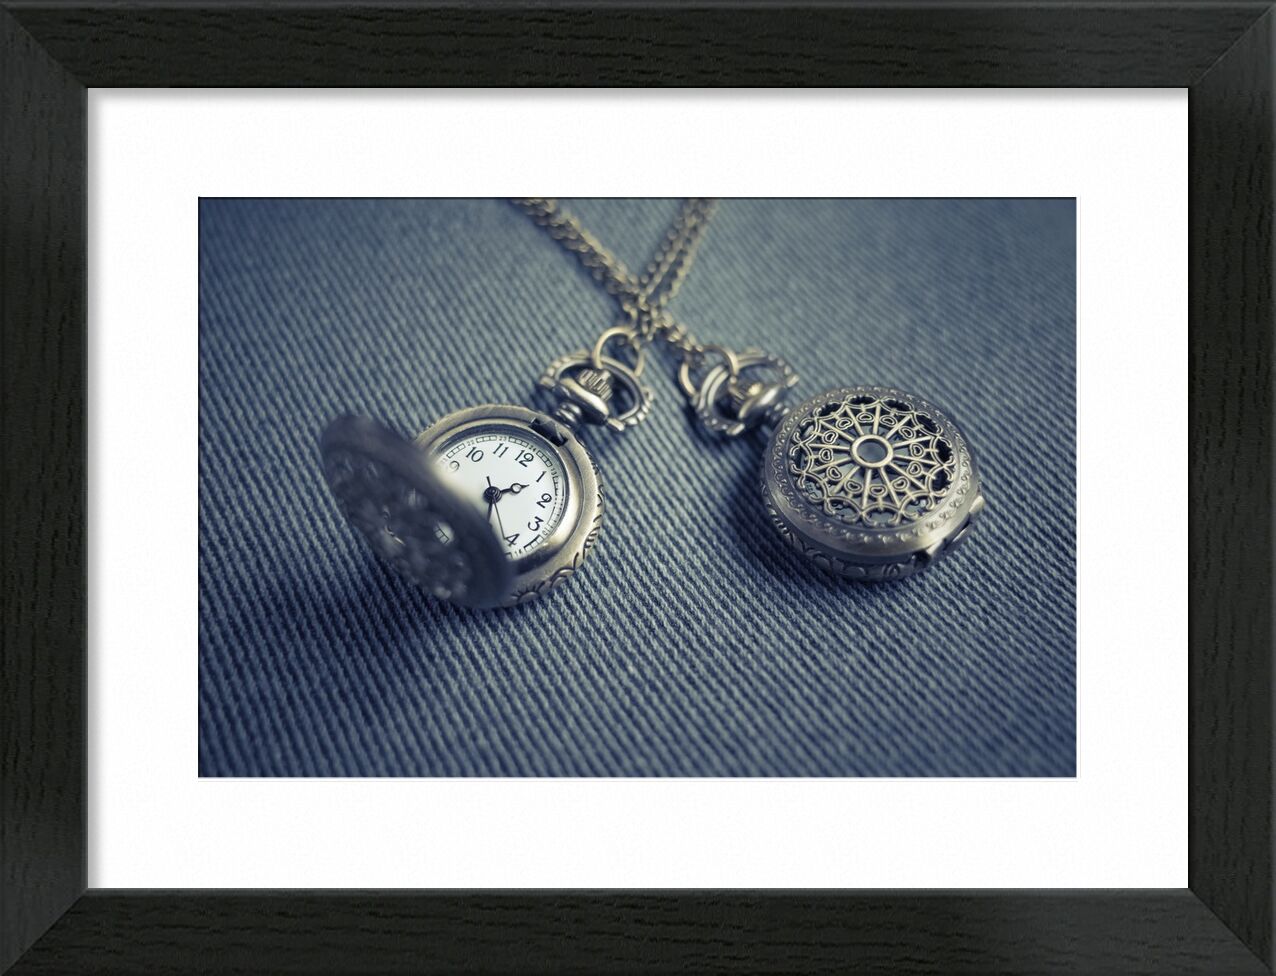 The pendant from Pierre Gaultier, Prodi Art, locket, pendant, necklace, watch